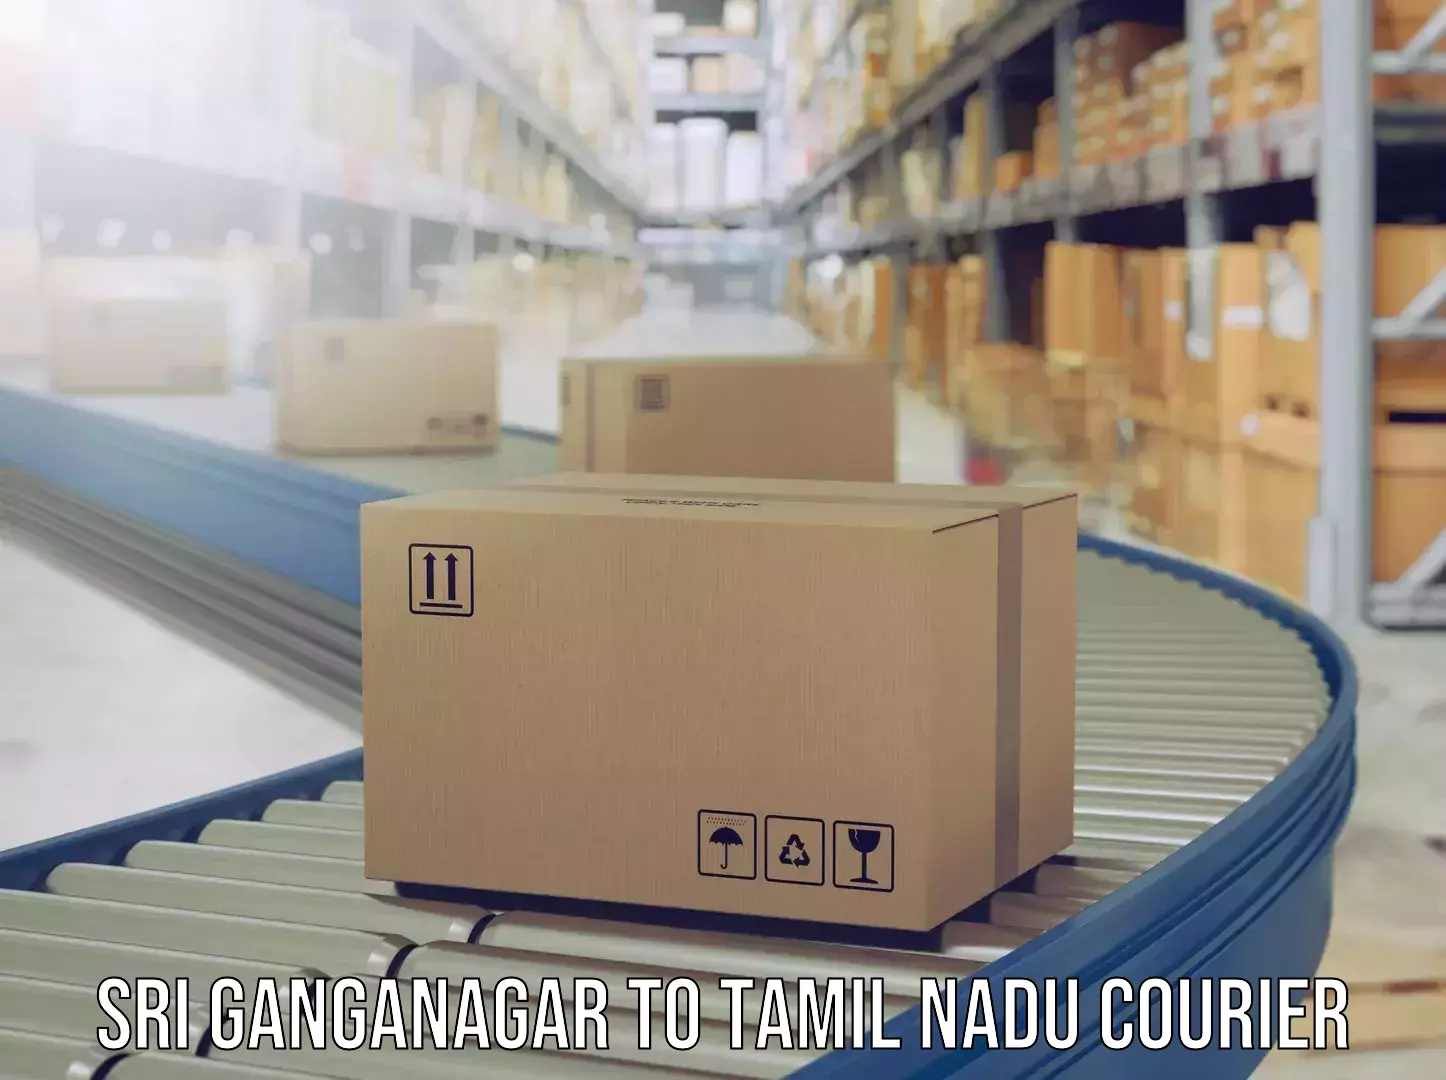 Luggage delivery app Sri Ganganagar to Anna University Chennai